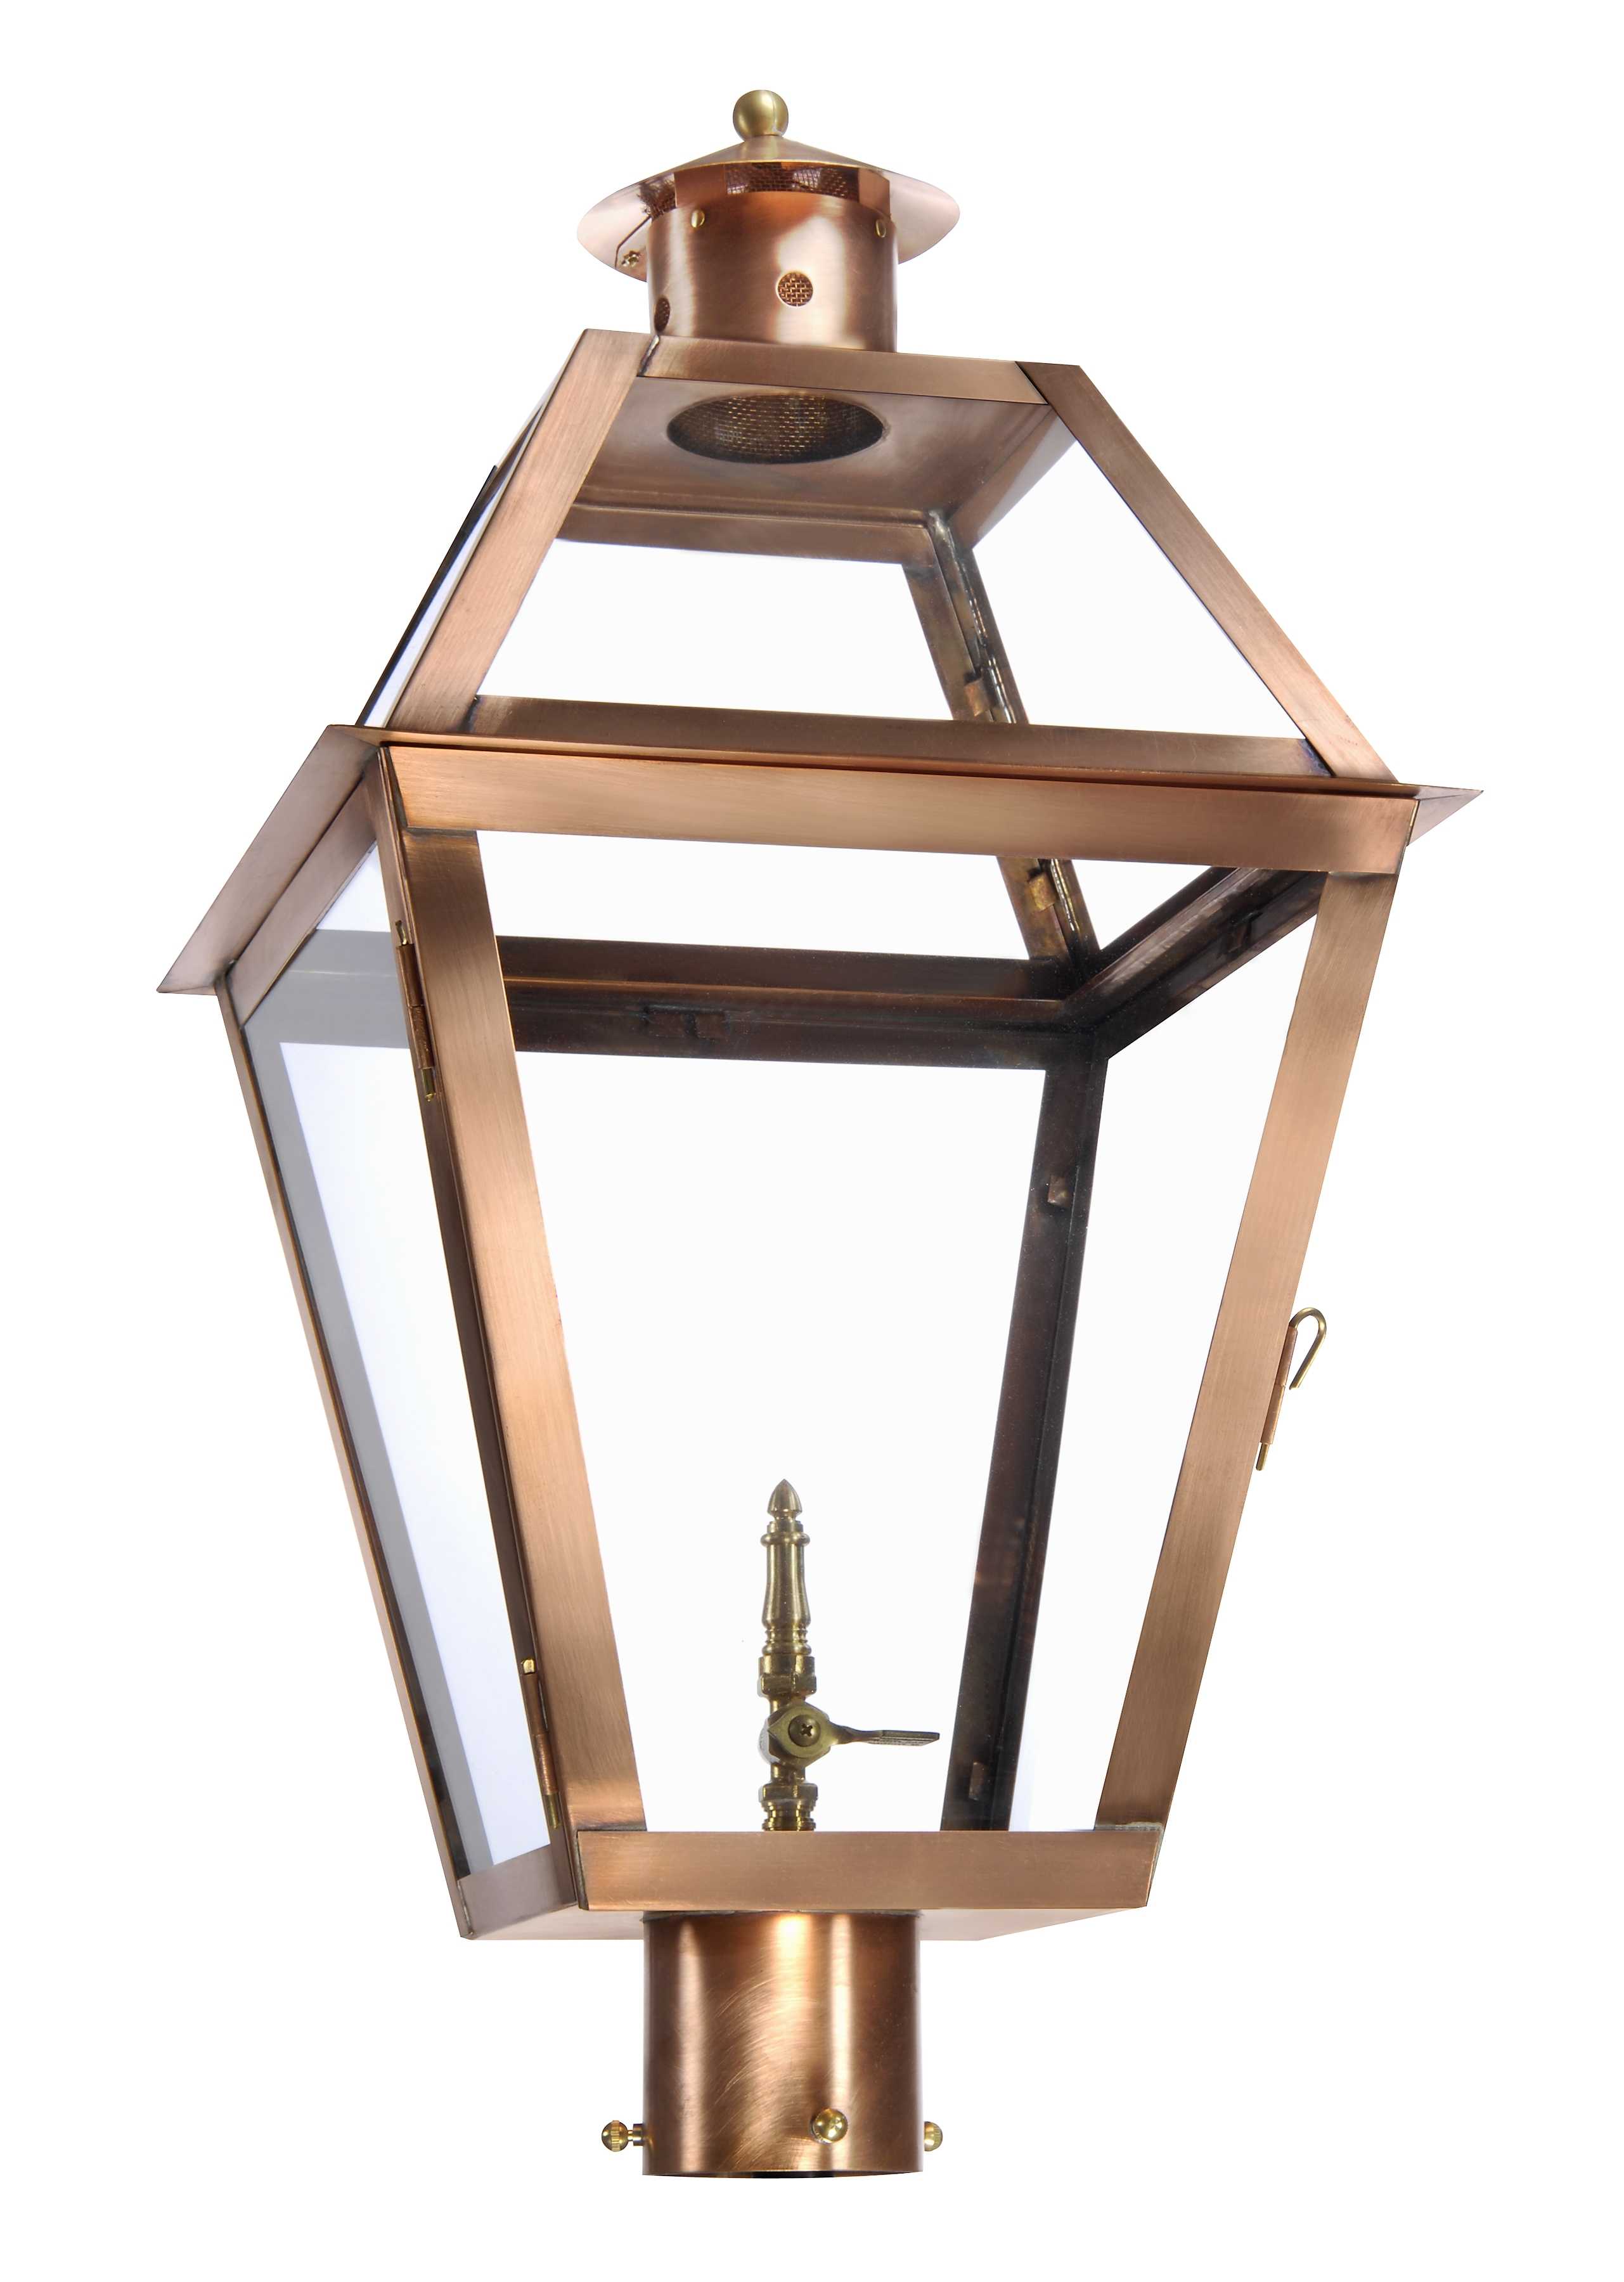 French Quarter Copper Lantern, Brown, 15, Post Mount, Propane